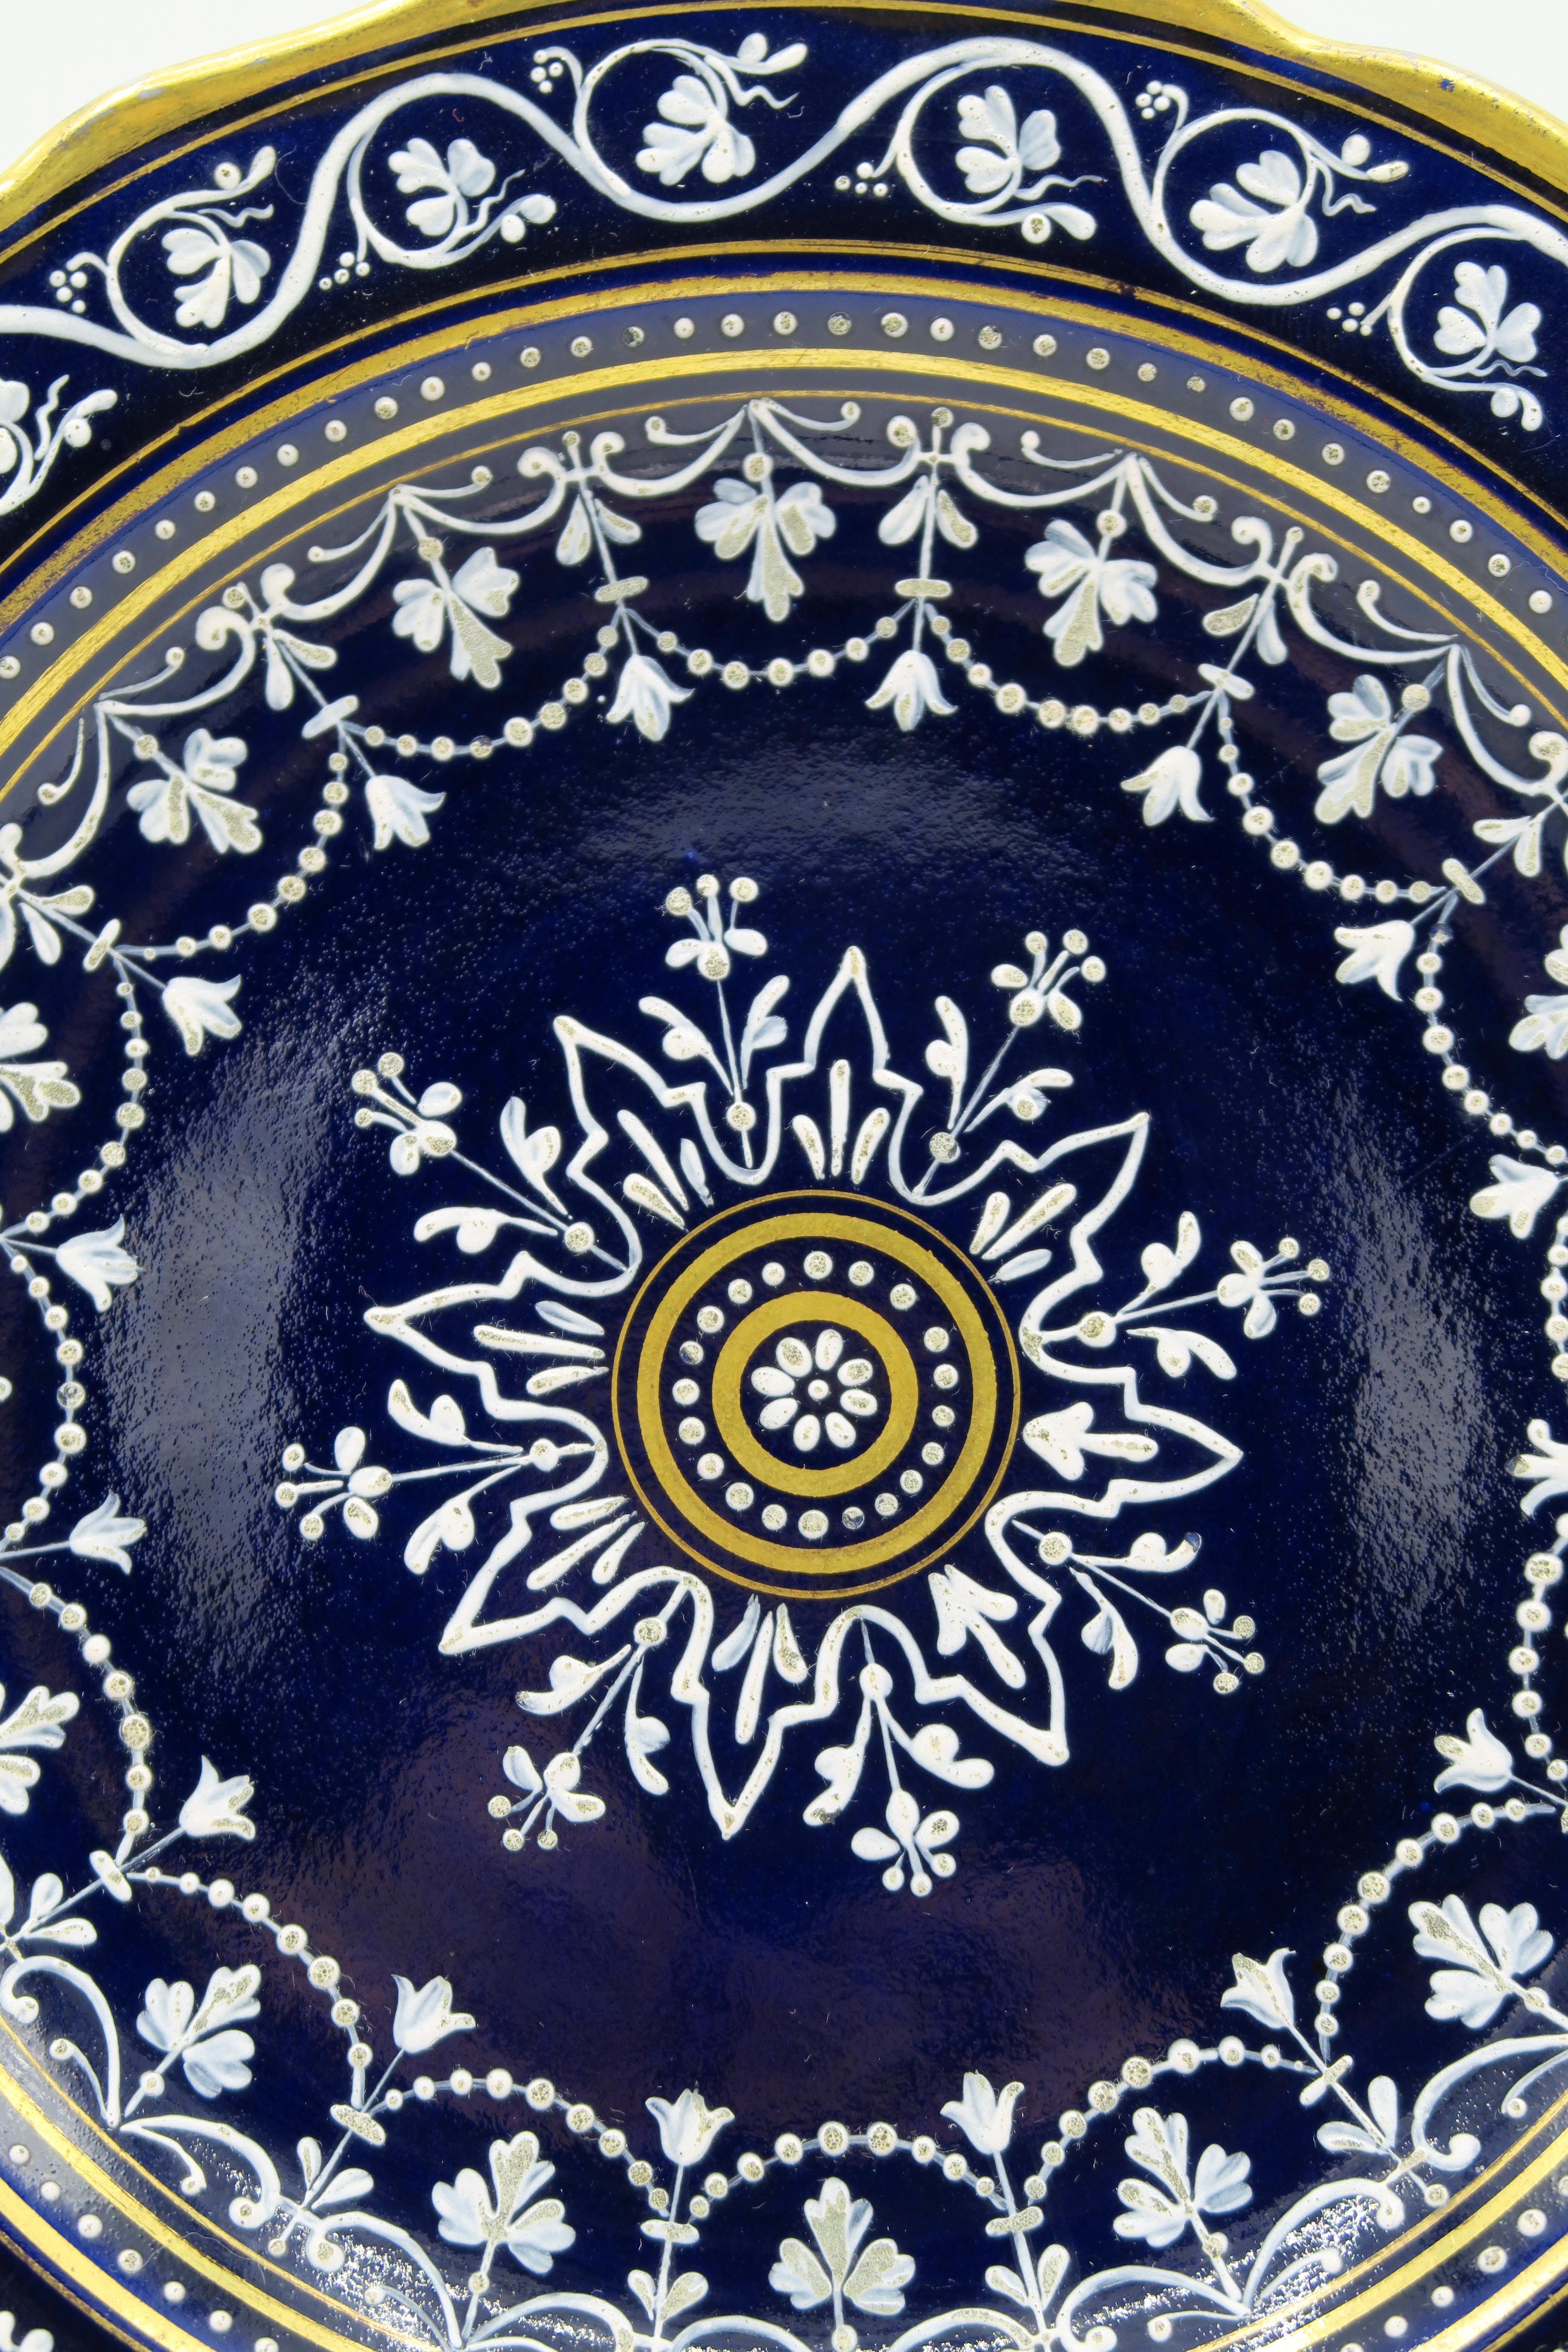 19th century cobalt blue Meissen Praline plate with limoges painting
Cobalt blue background, Gold wavy edges with elaborate “Limoges painting”.
(Slip painting on glaze.)

Leicht ansteigende Fahne, wellenförmiger, goldstaffierter Rand.